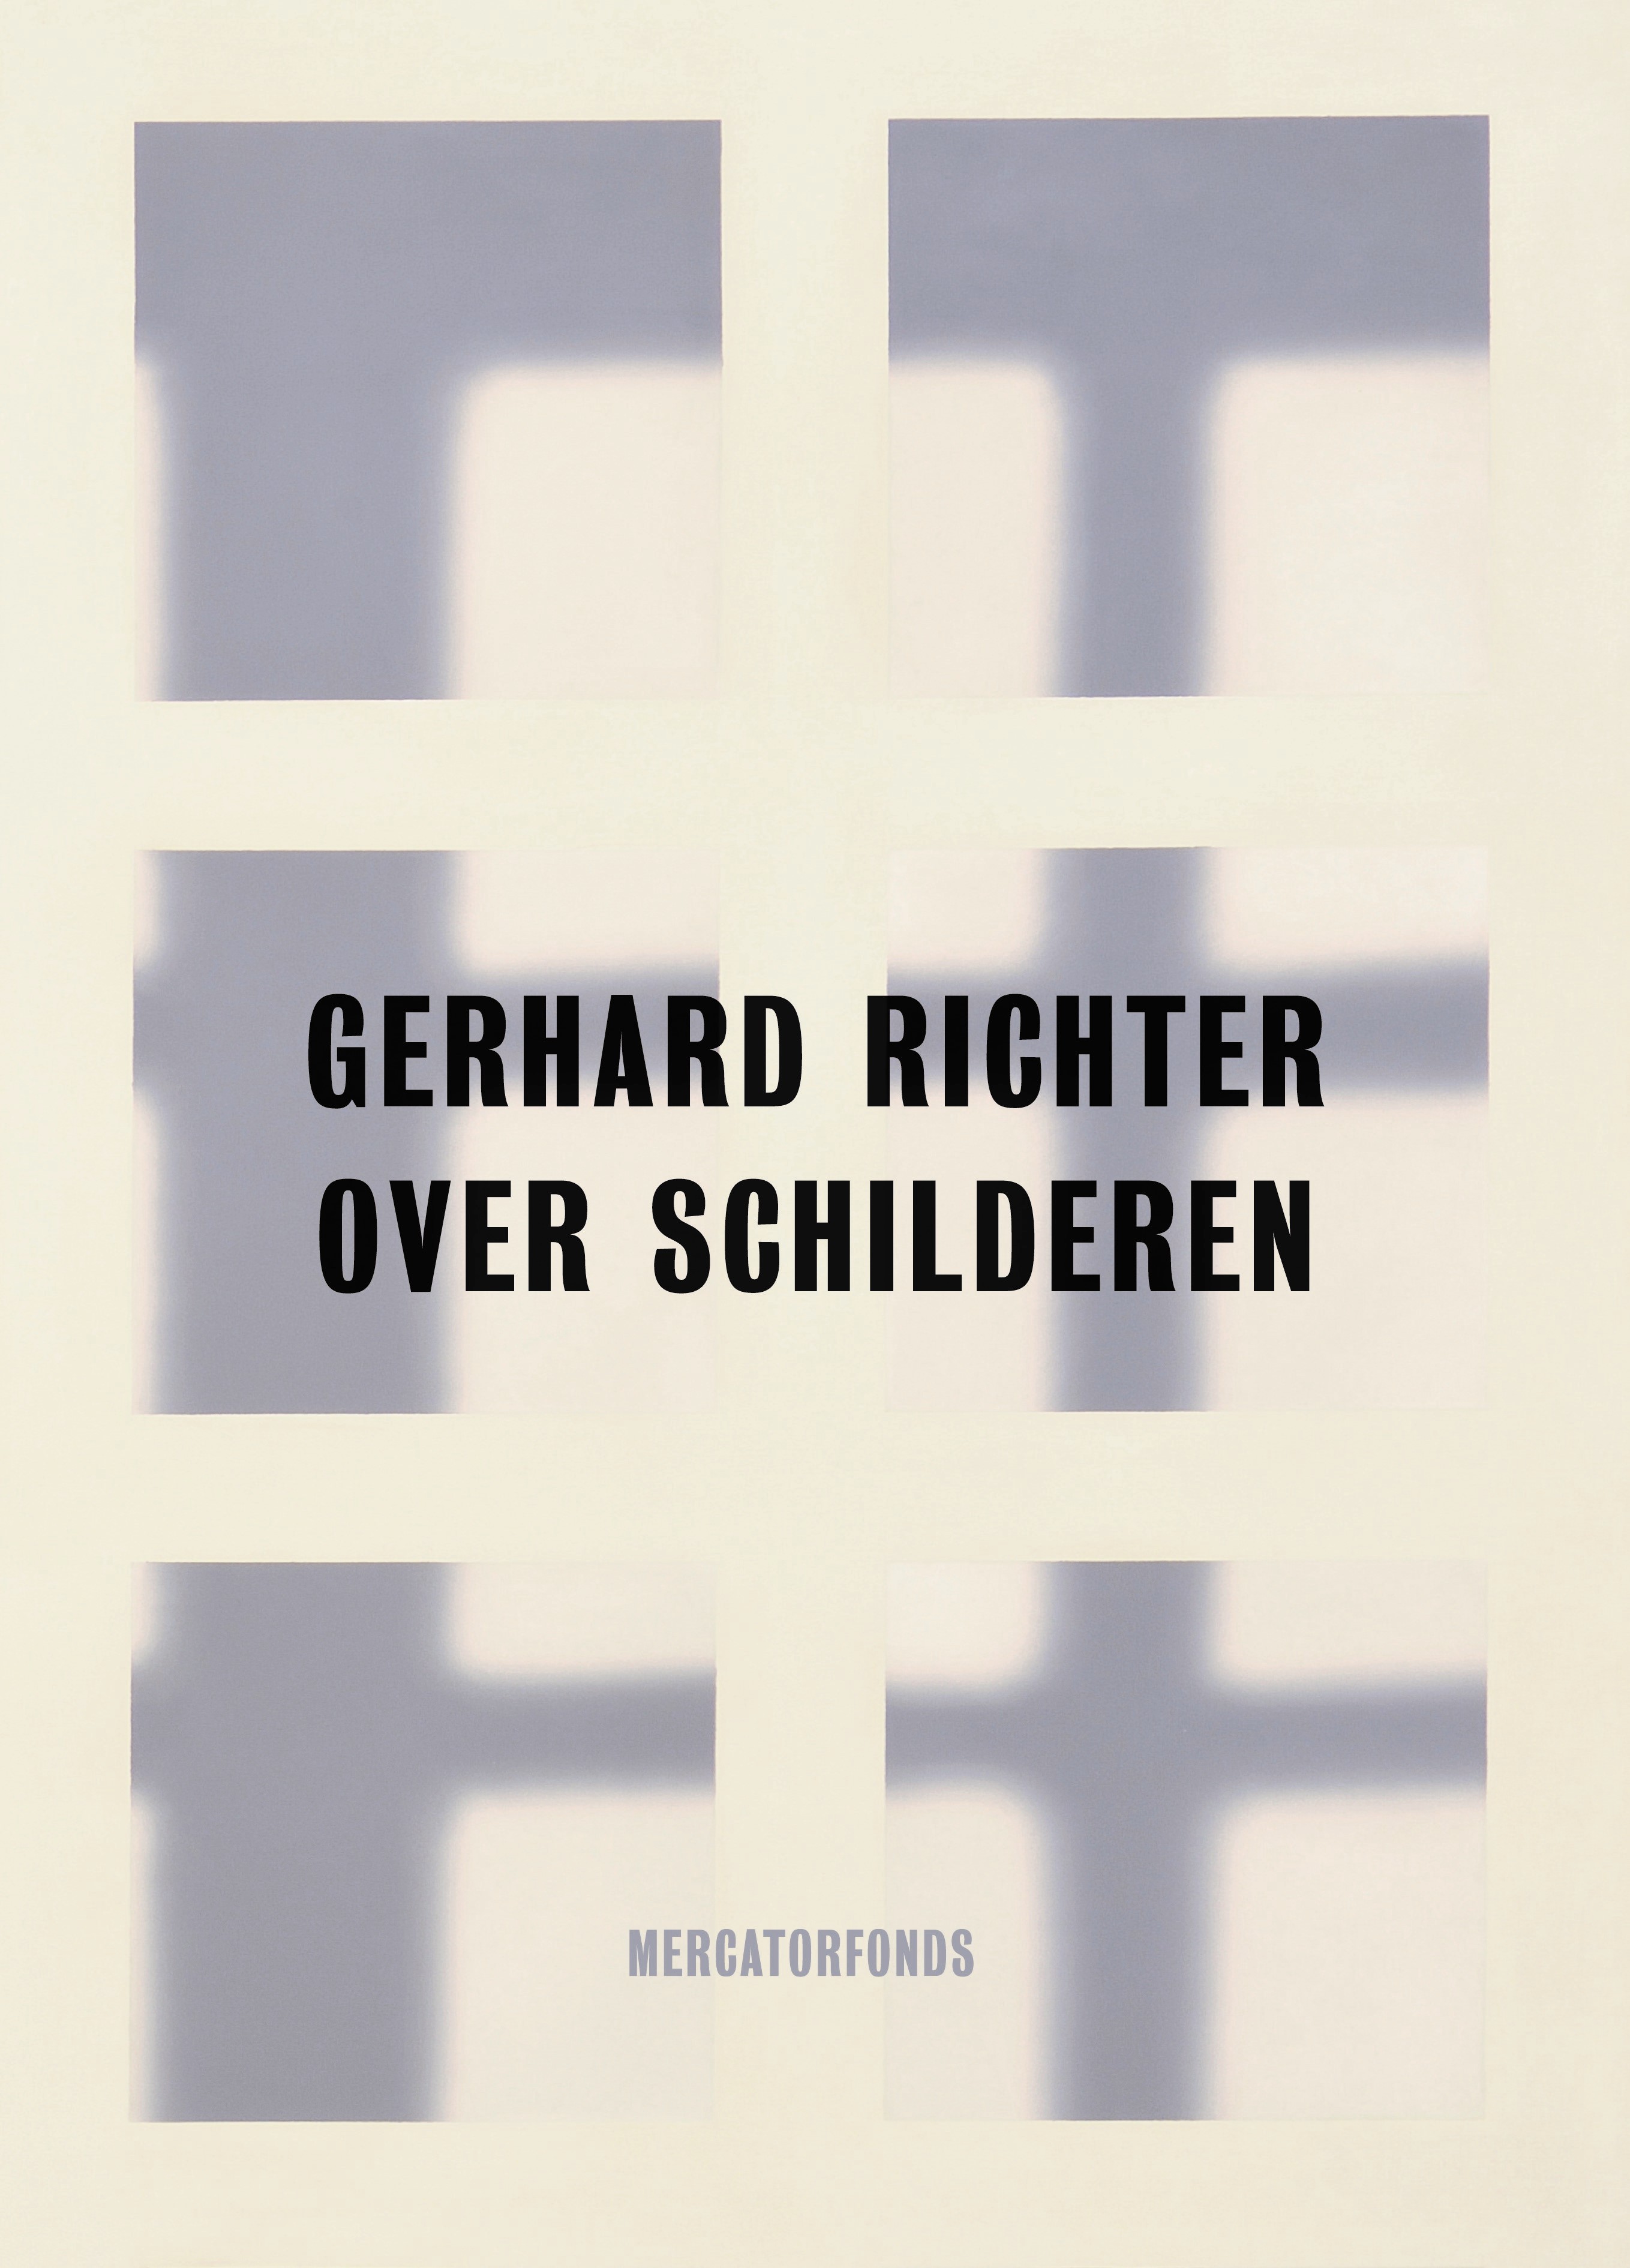 Gerhard Richter – over schilderen